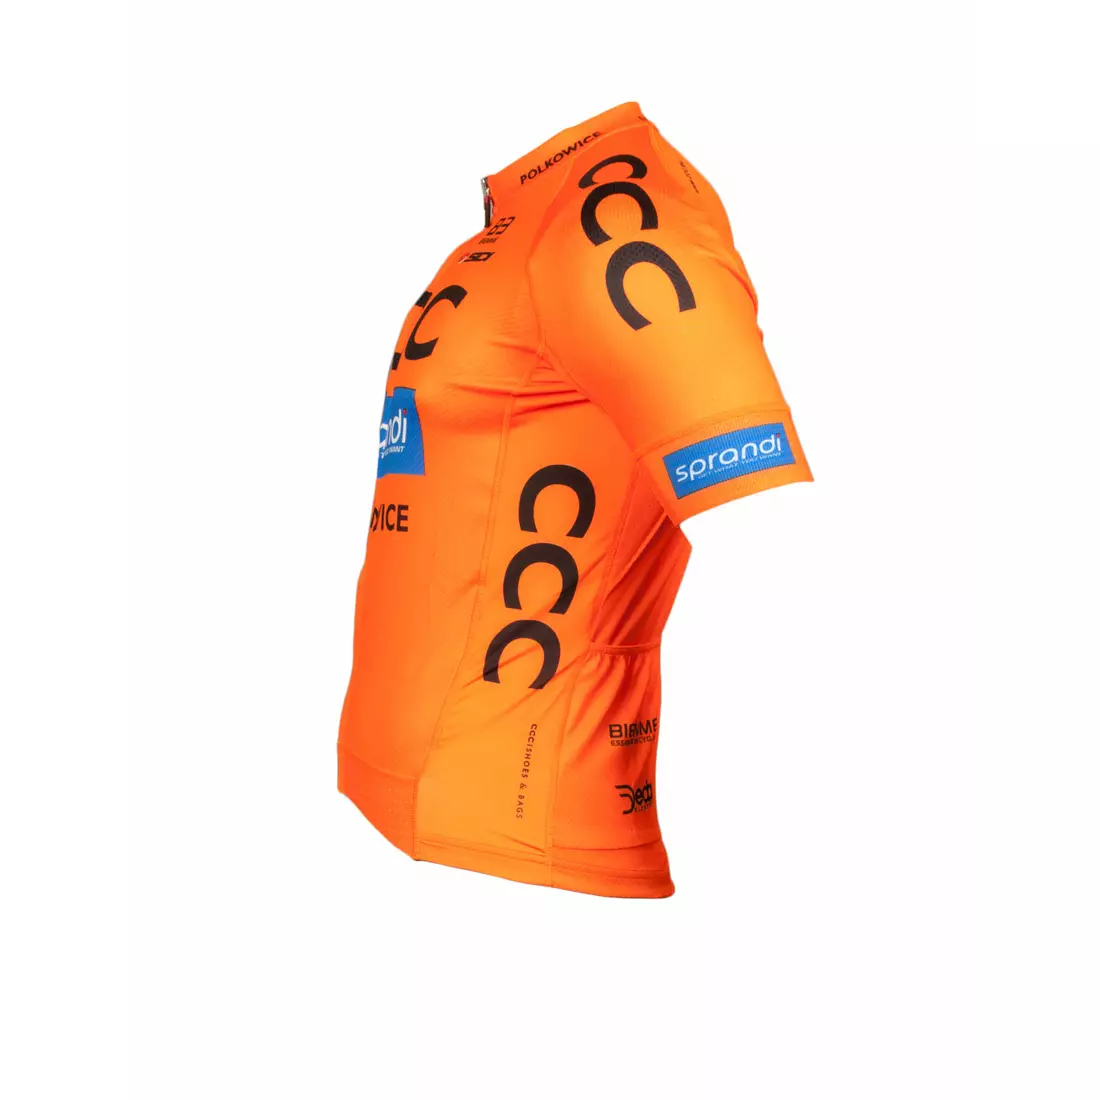 BIEMME CCC SPRANDI POLKOWICE Racing Team 2017 PRO pánský cyklistický dres